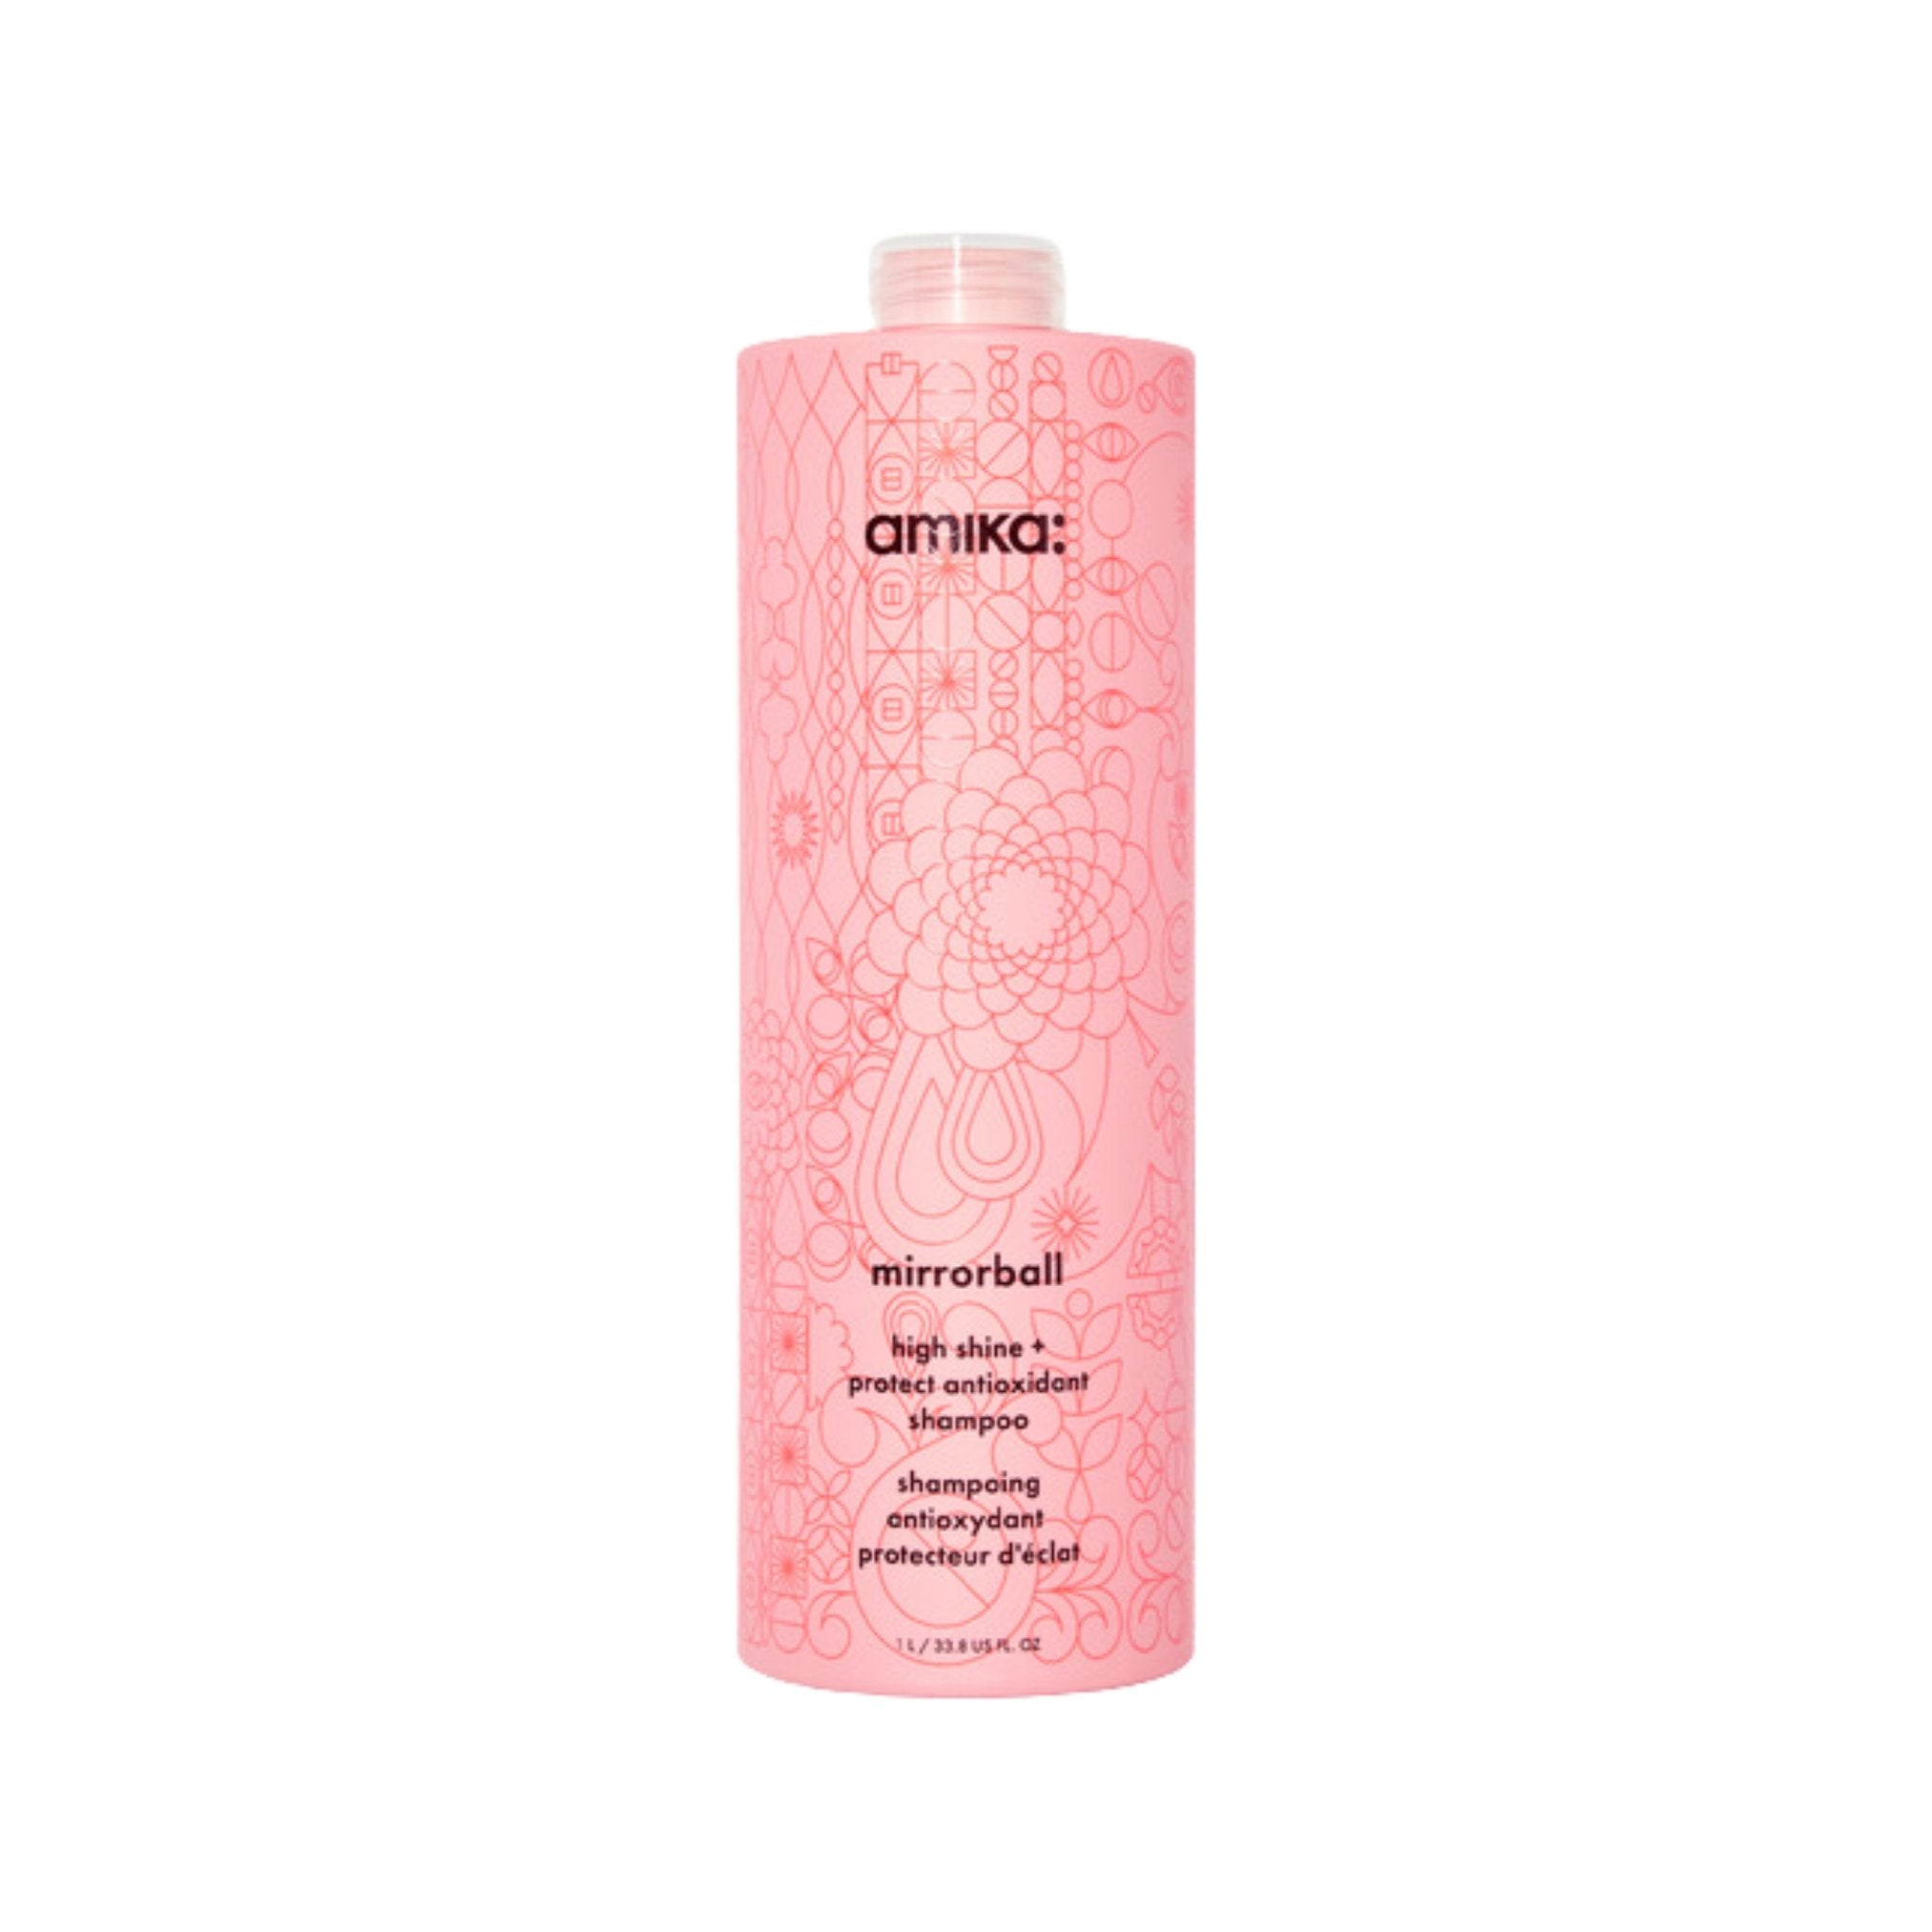 Amika. Shampoing antioxydant Mirrorball - 1000 ml - Concept C. Shop